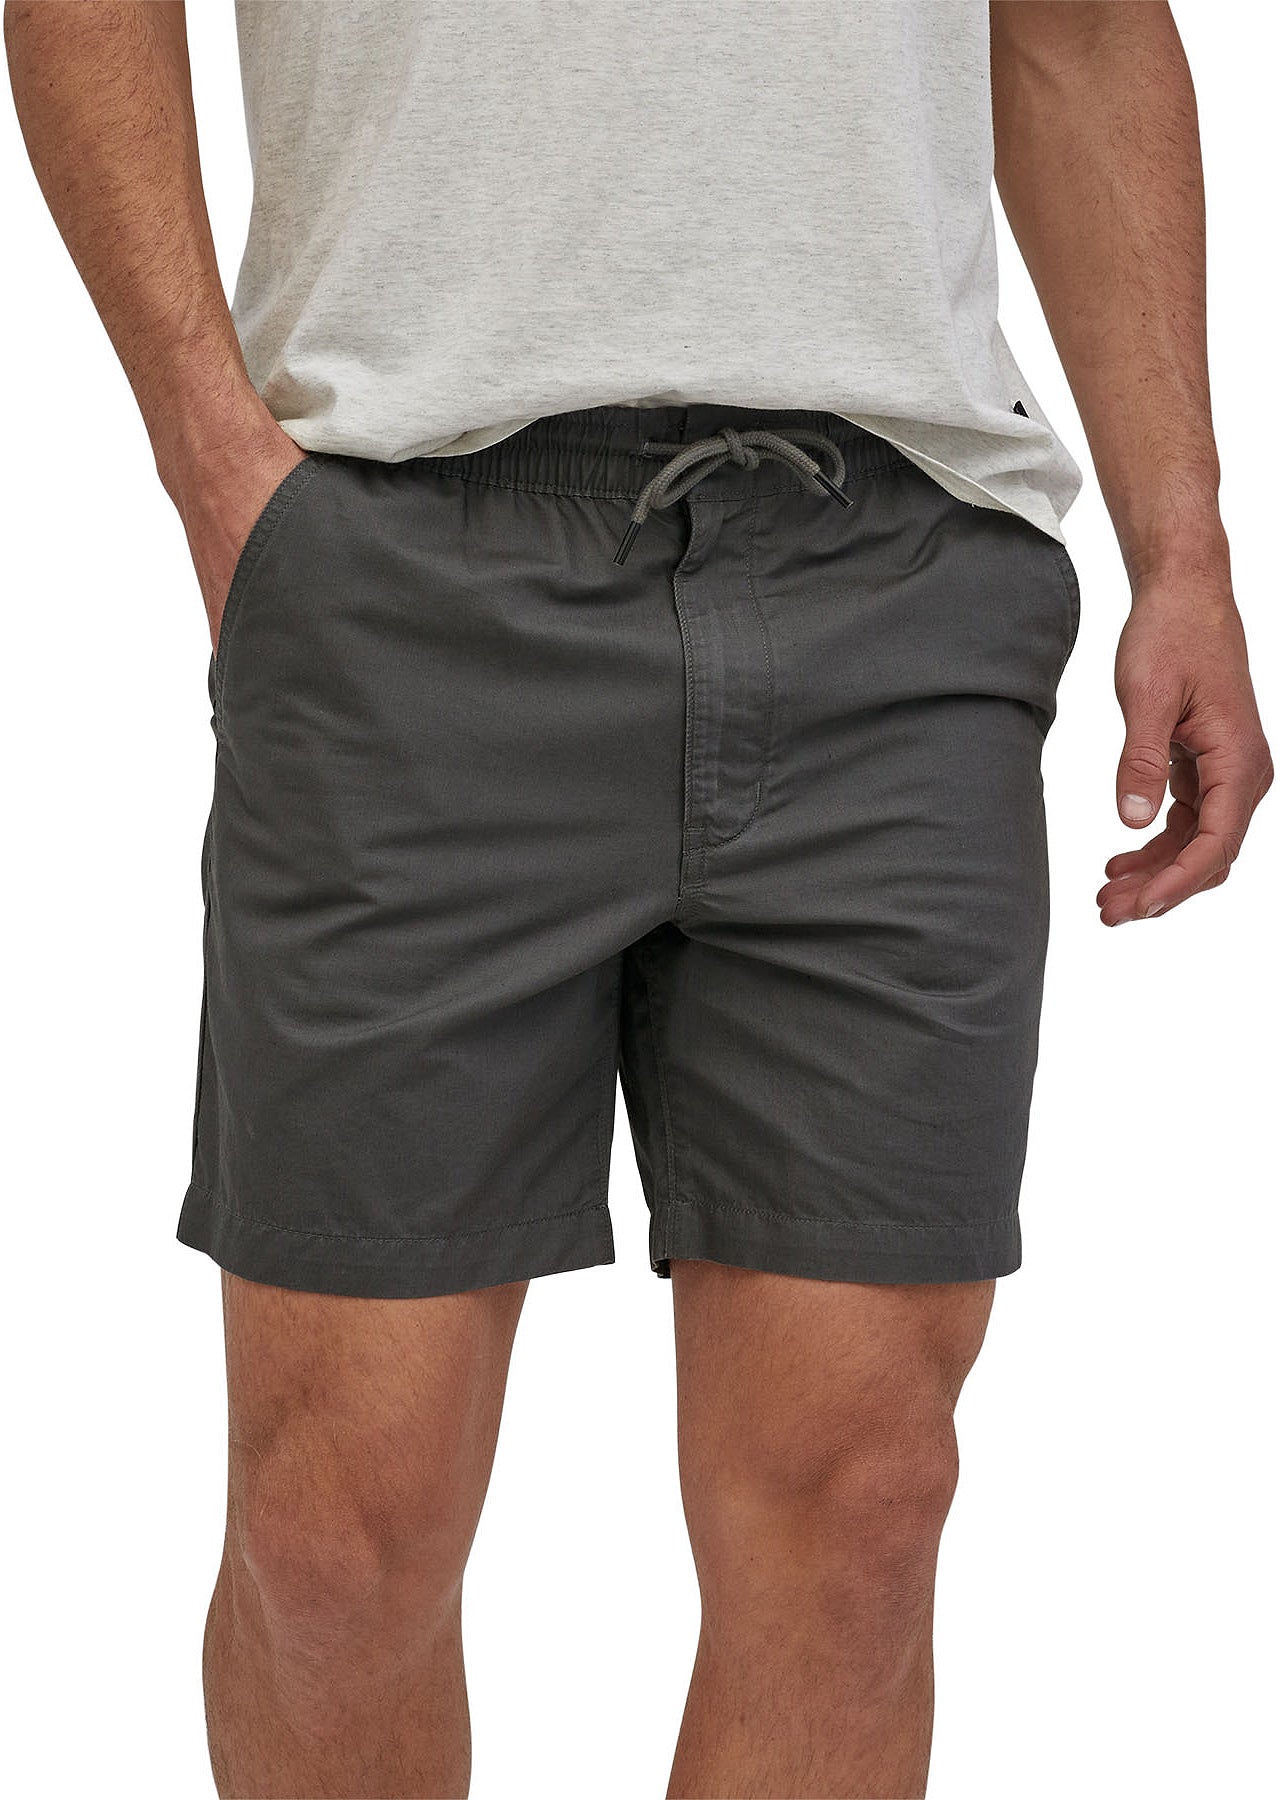 Patagonia Lightweight All-Wear Hemp Shorts - Men's 6 Inseam